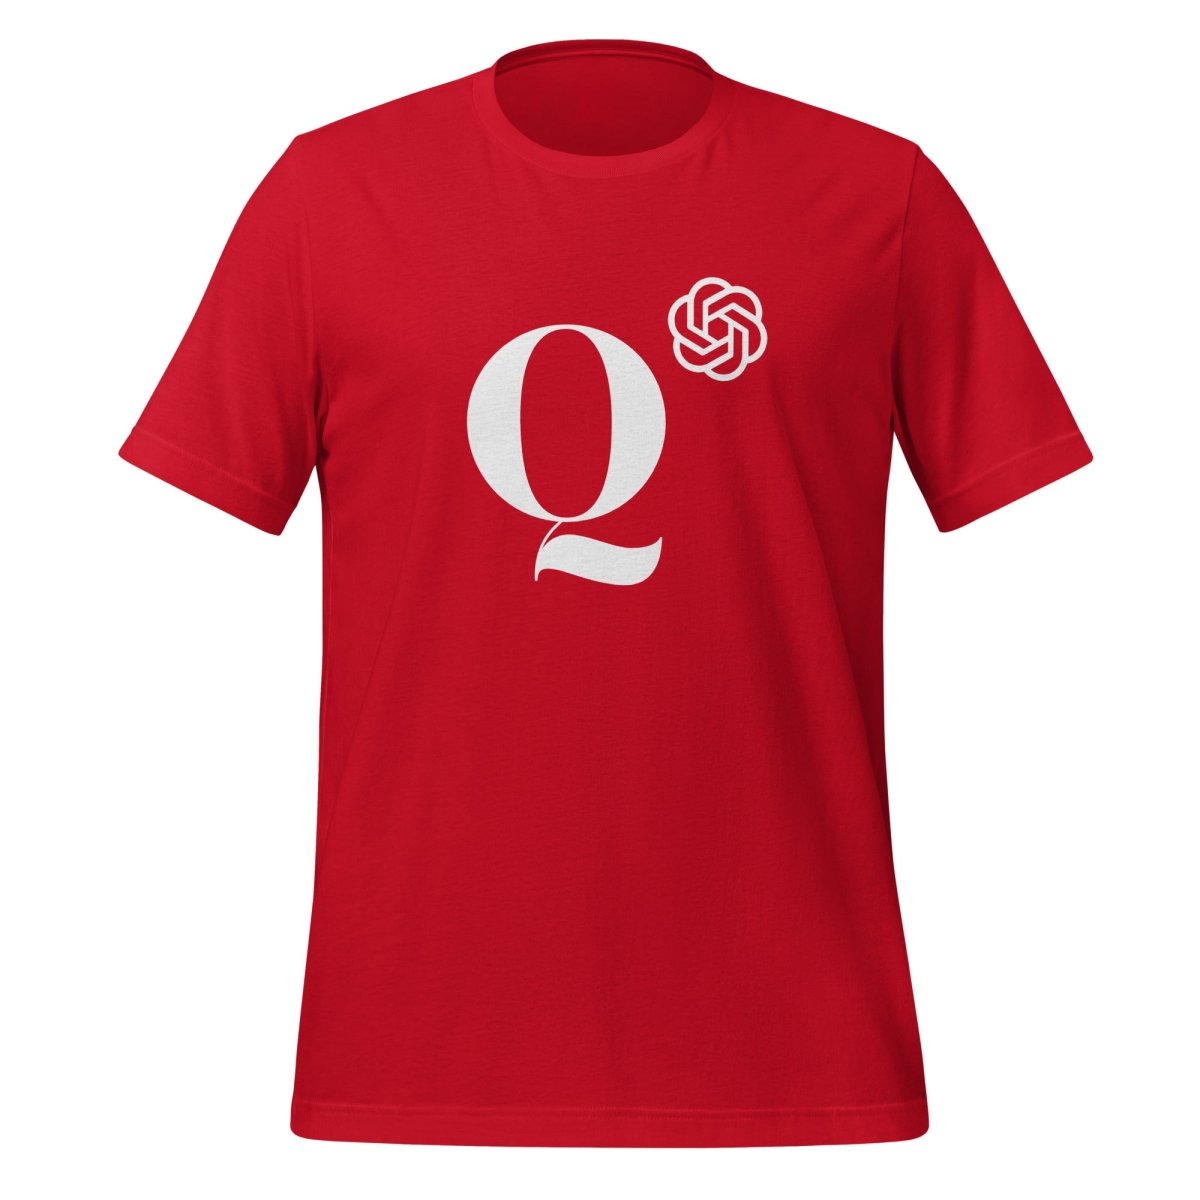 Q* (Q - Star) T - Shirt 5 (unisex) - Red - AI Store